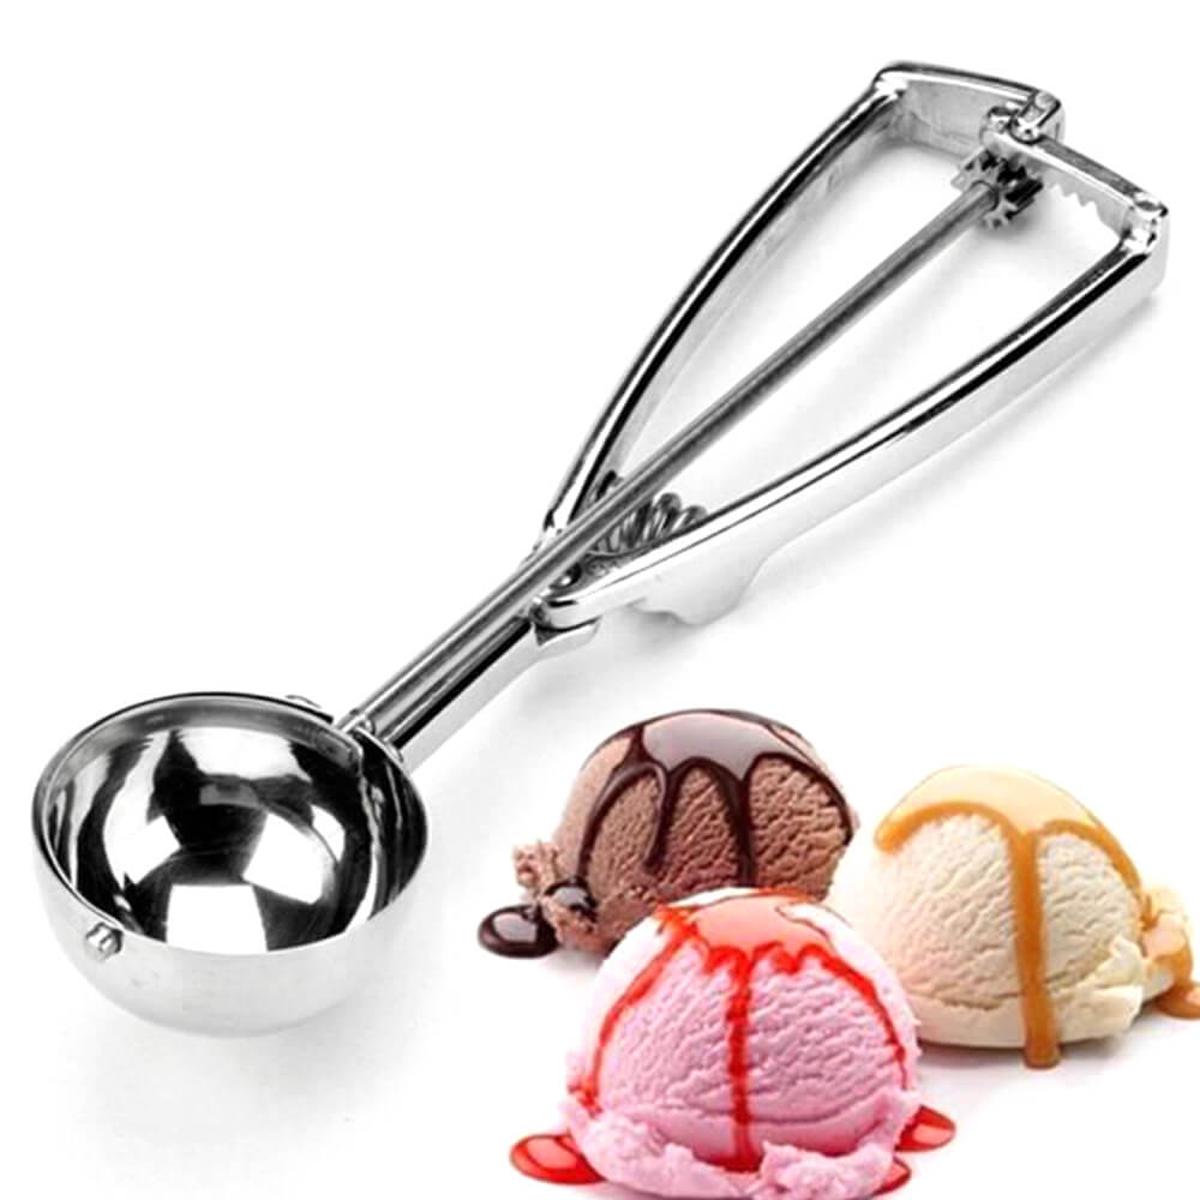 Ice cream Scoop Spoon- Stainless Steel Ice cream Ball Maker- Ice cream Scooper